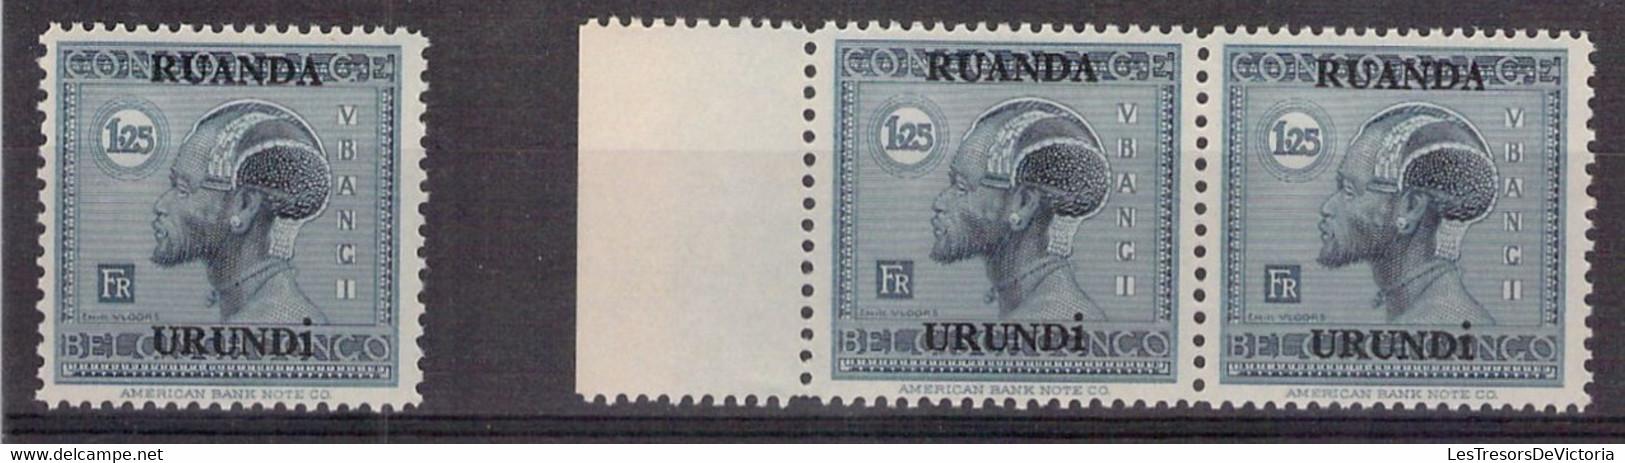 Ruanda Urundi - Lot De 11 COB 73 **MNH 1.25 Bleu Pale - 1925 - Cote 33 COB 2022 - Ungebraucht